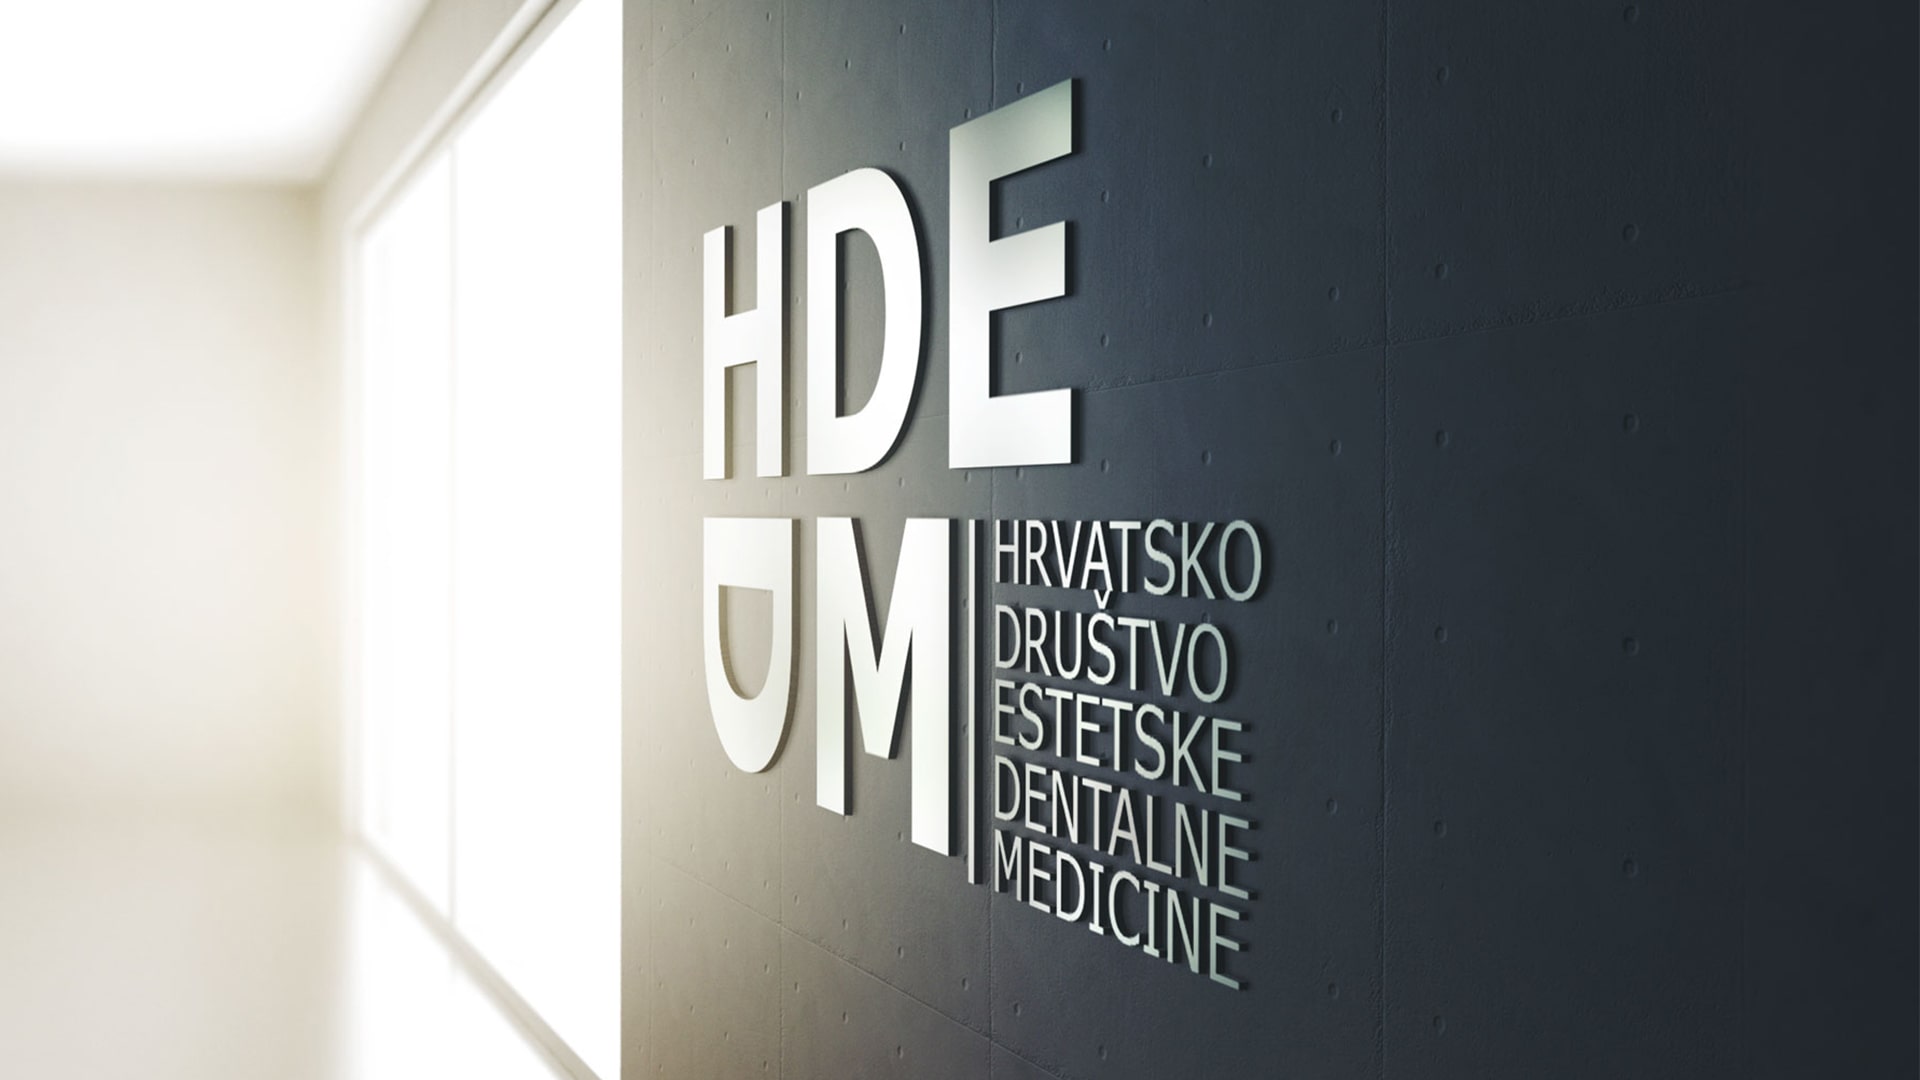 hdedm-background